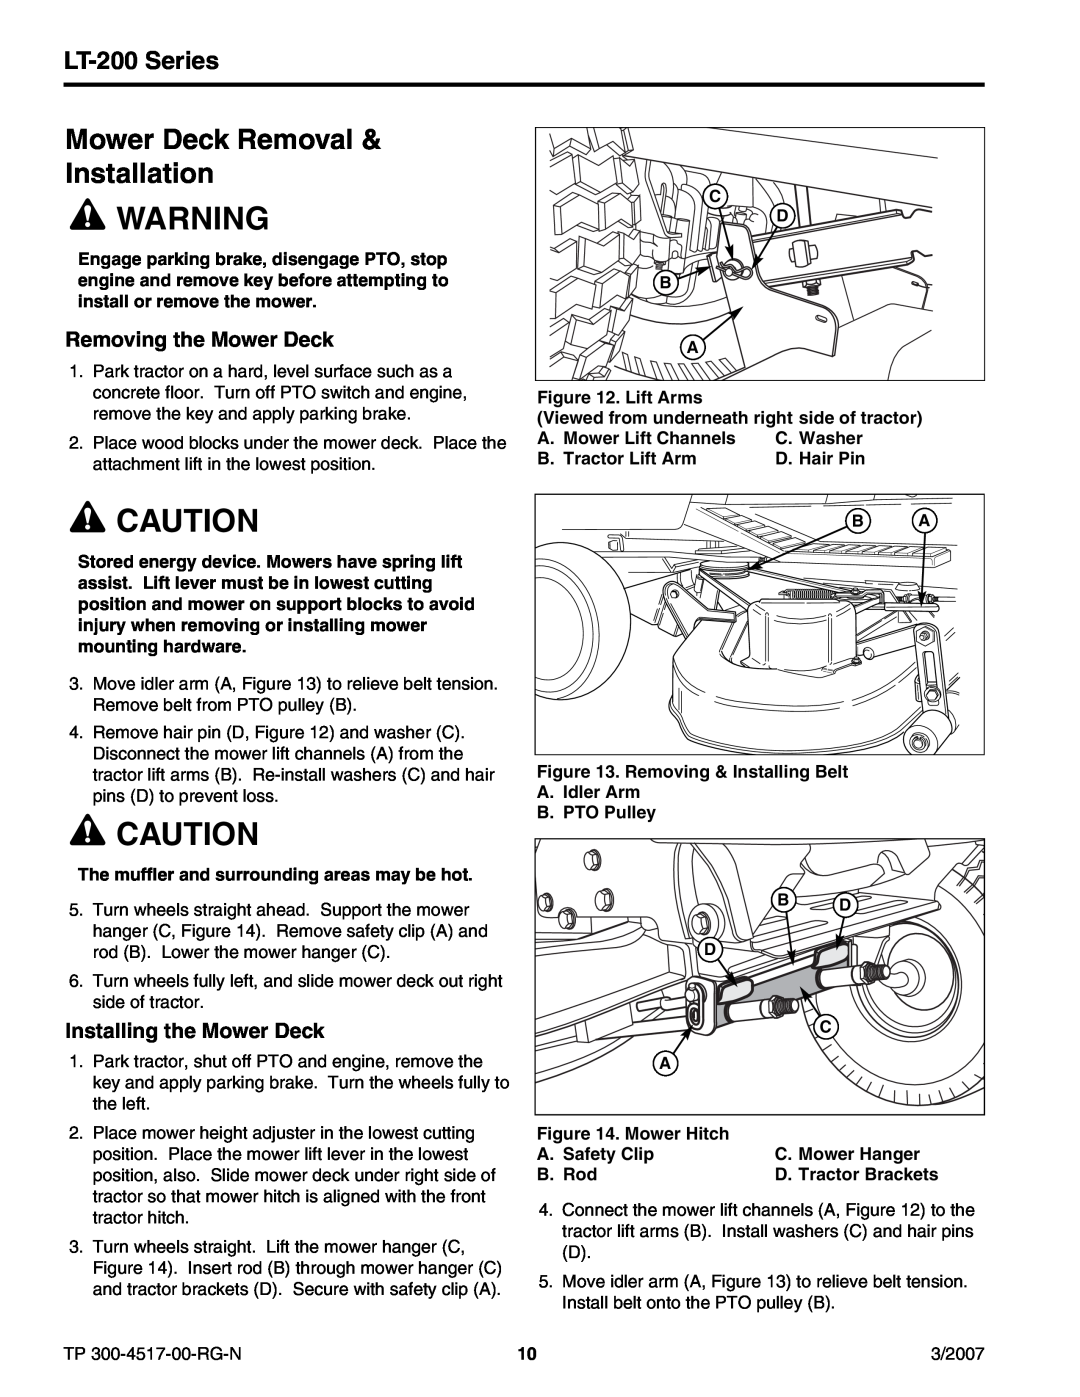 Briggs & Stratton LT-200 manual Mower Deck Removal Installation, Removing the Mower Deck, Installing the Mower Deck 